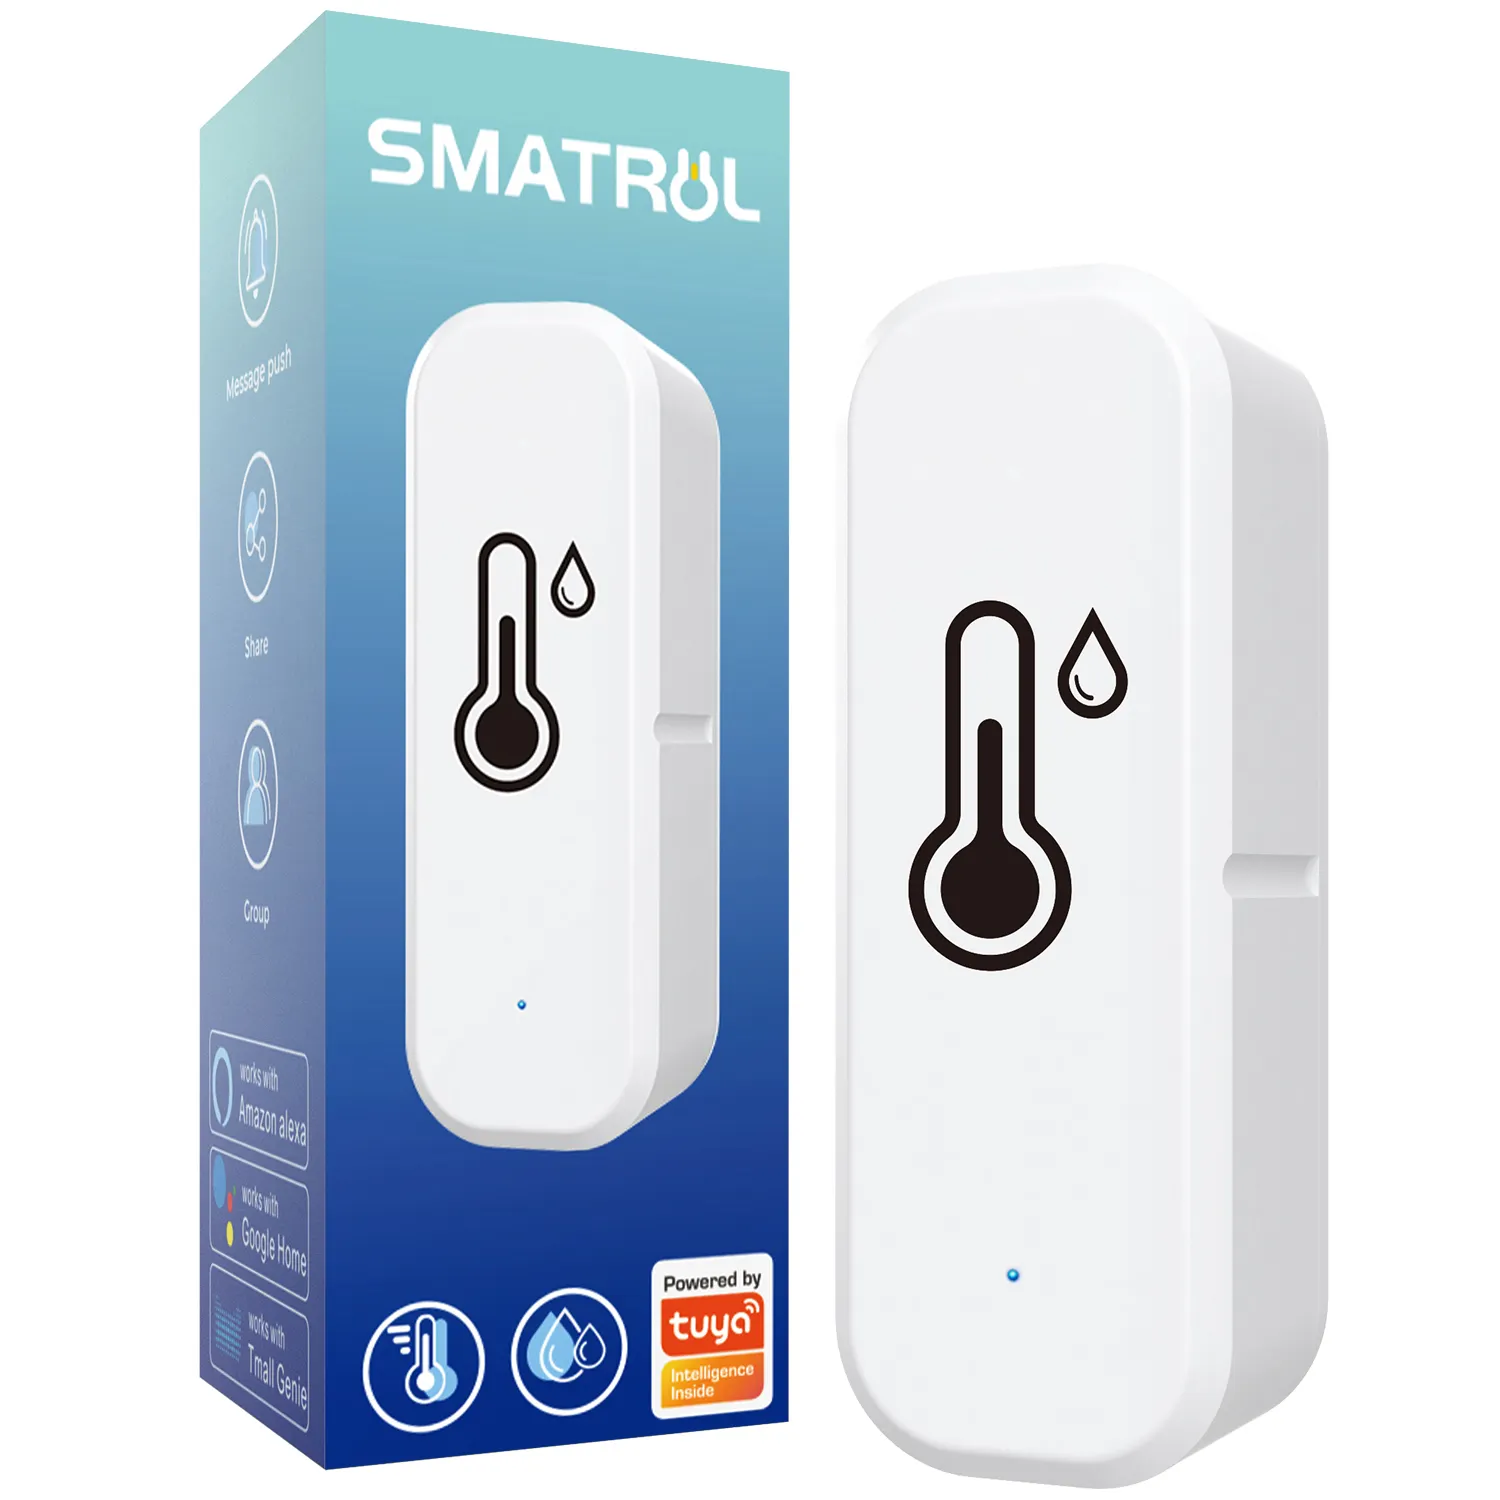 Wifi + Bluetooth Smart Temperature Humidity Sensor Hygrometer Thermometer Voice Alarm For Alexa Google Home